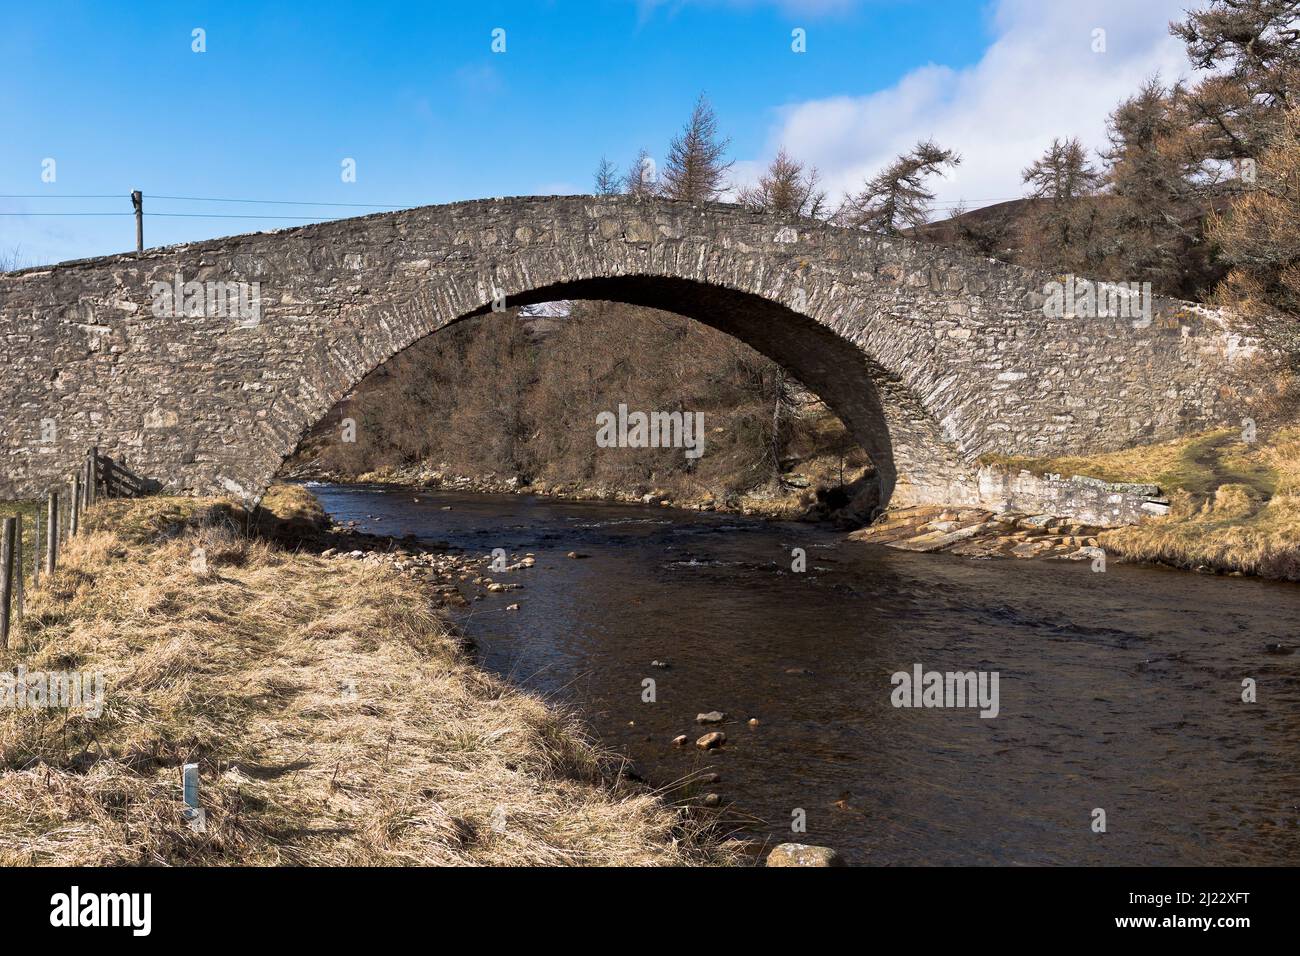 dh Gairnshiel Bridge GLEN GAIRN ABERDEENSHIRE River Gairn Scottish stone humpback bridges Scotland hump back road A939 Glengairn Stock Photo